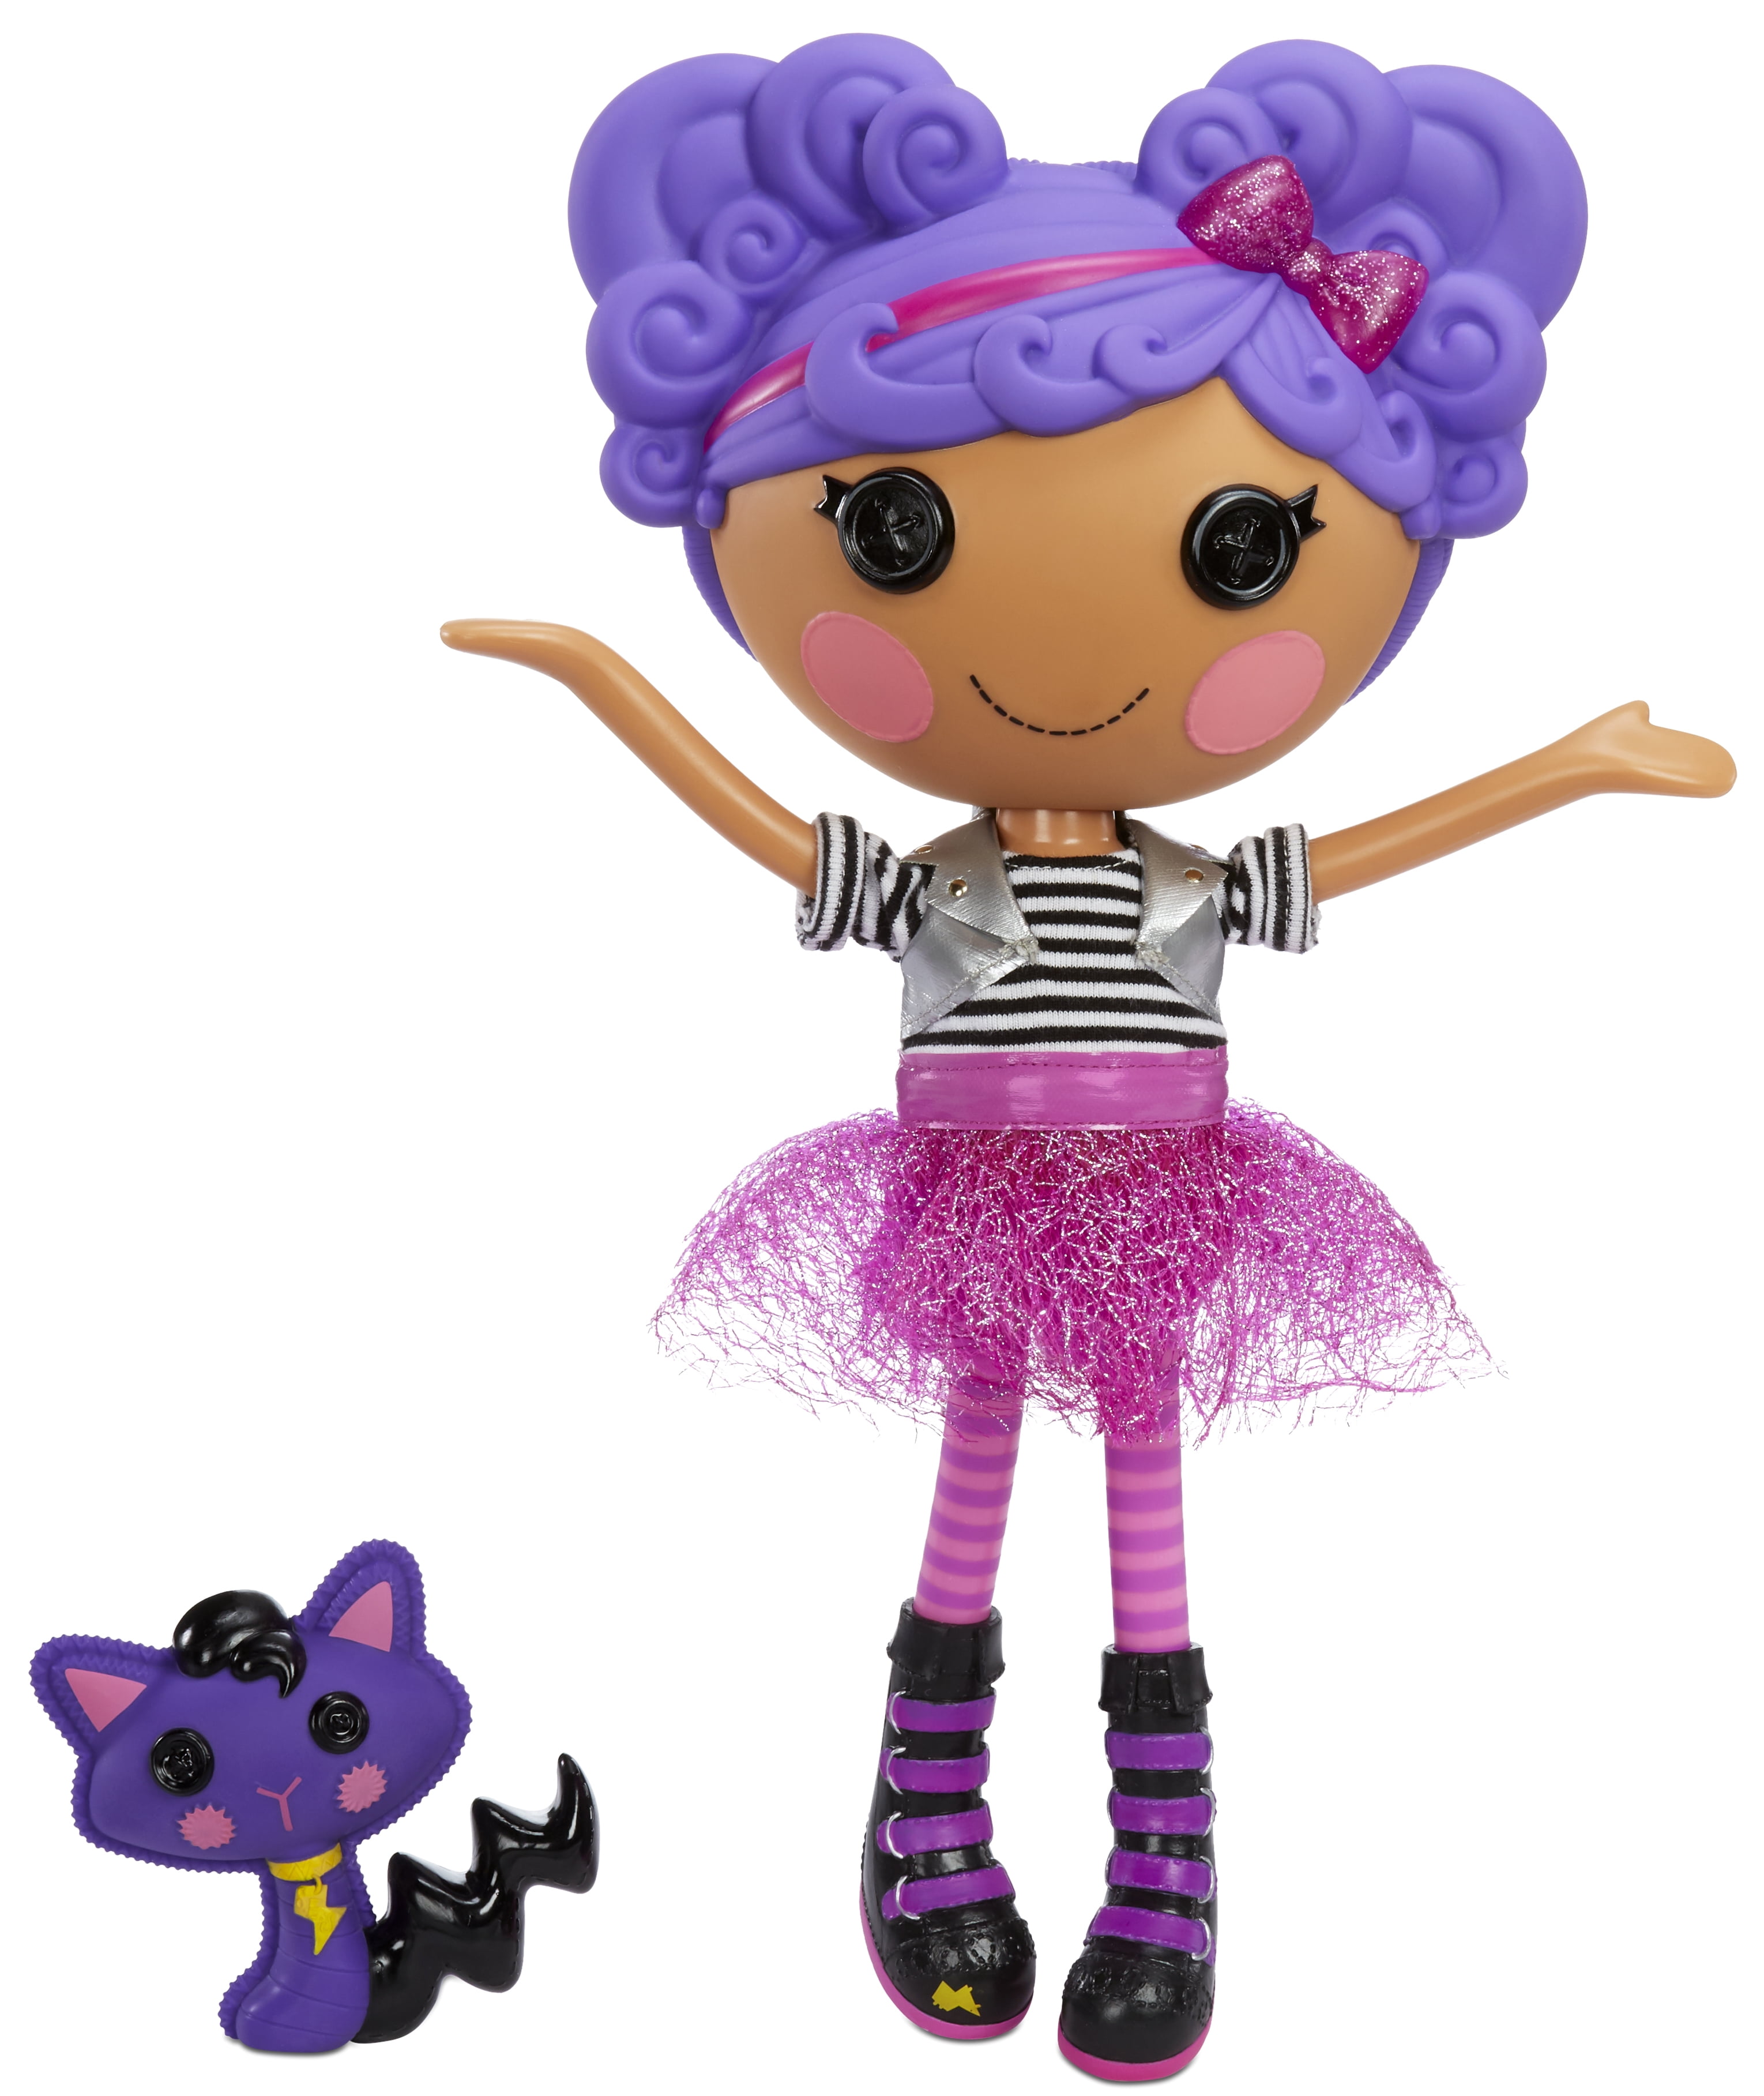 BRATZ Party Cloe Articulated Doll 10th Anniversary NEW IN BOX 10